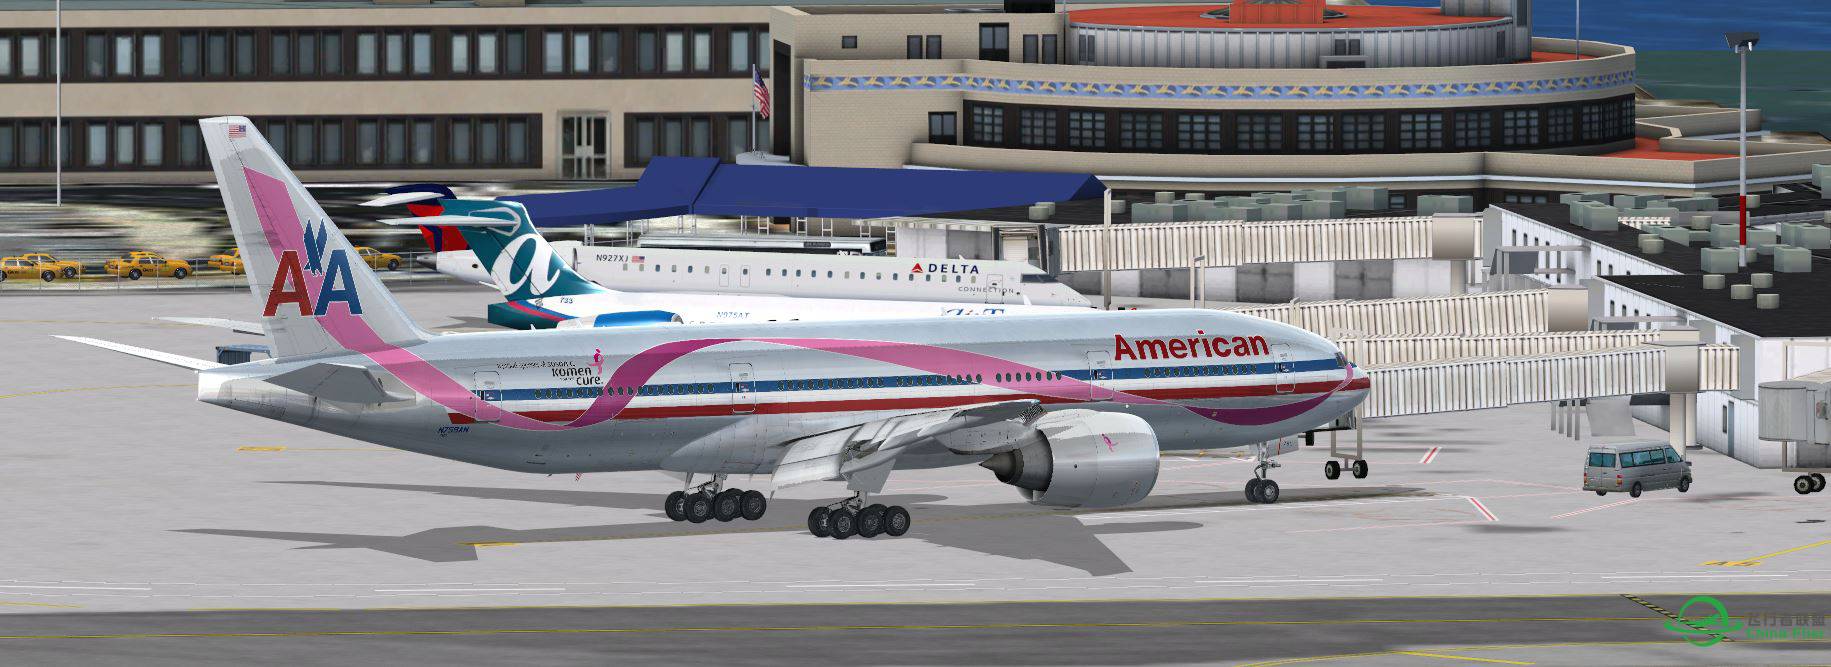 B777 American Airline-8846 